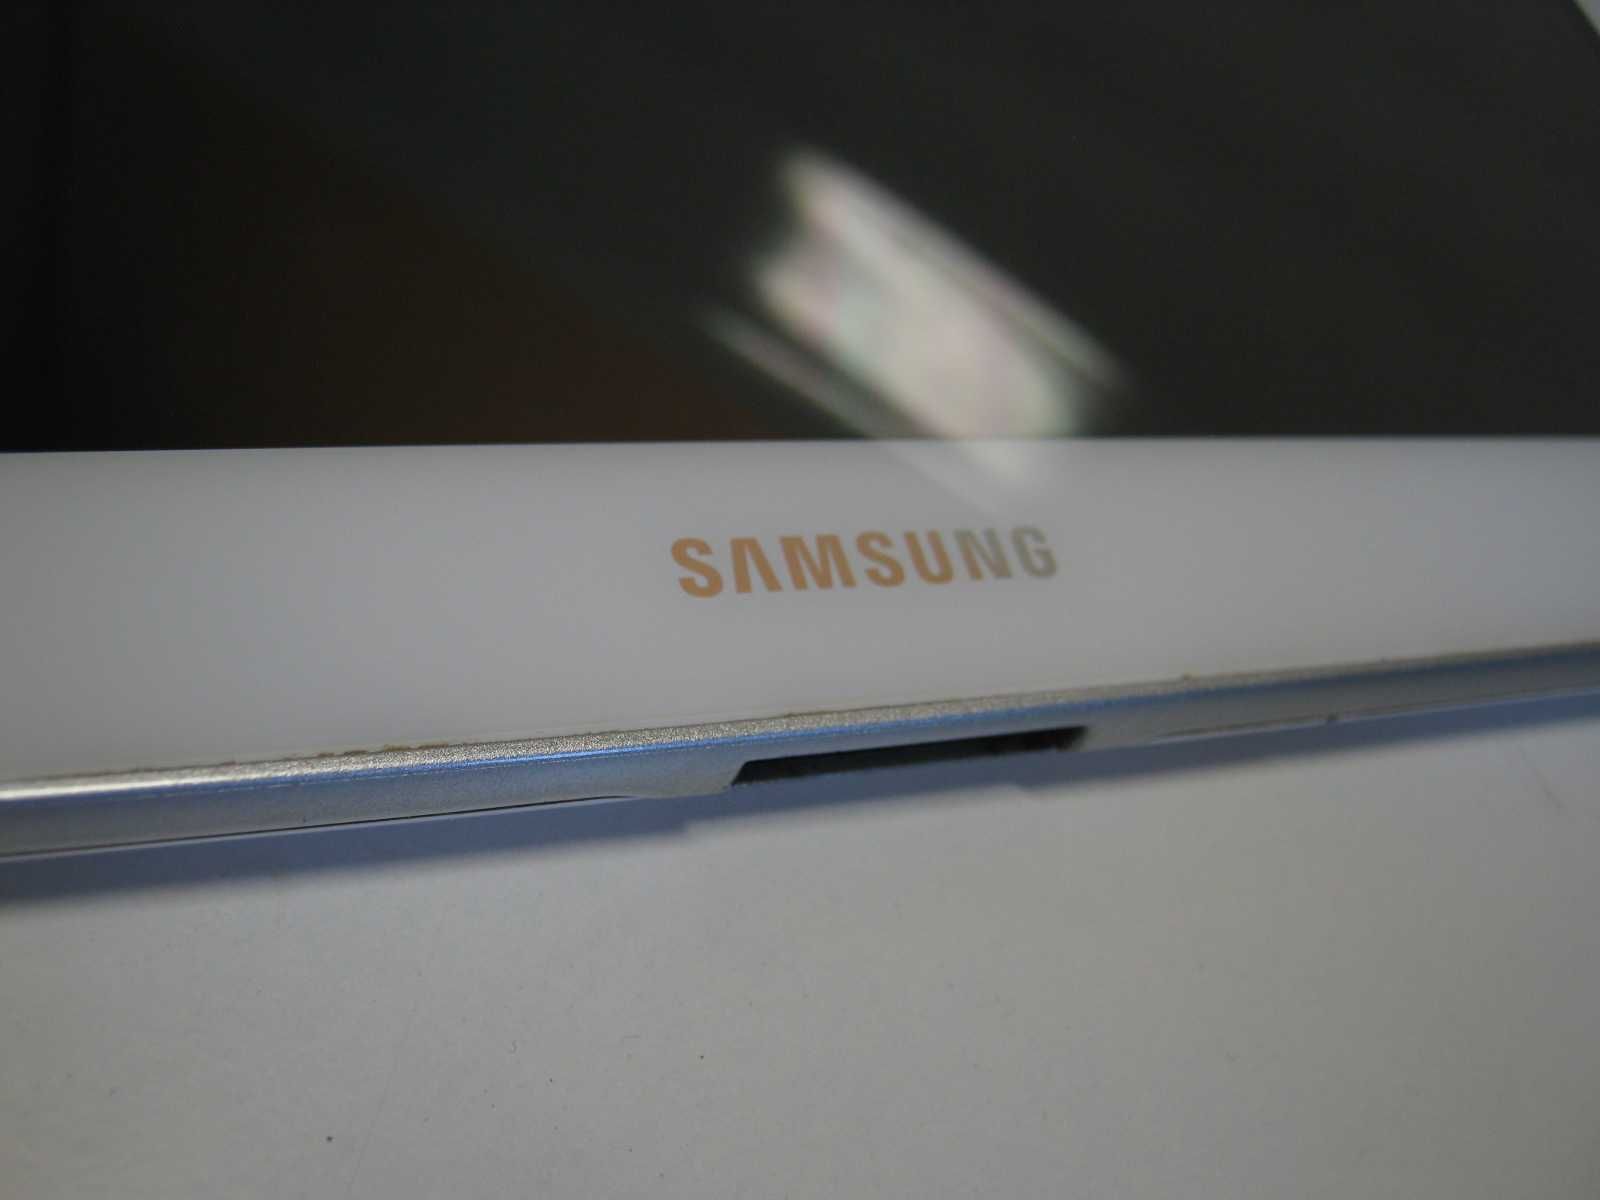 Samsung Galaxy 10'1. Стан - ідеал! 3G, Sim